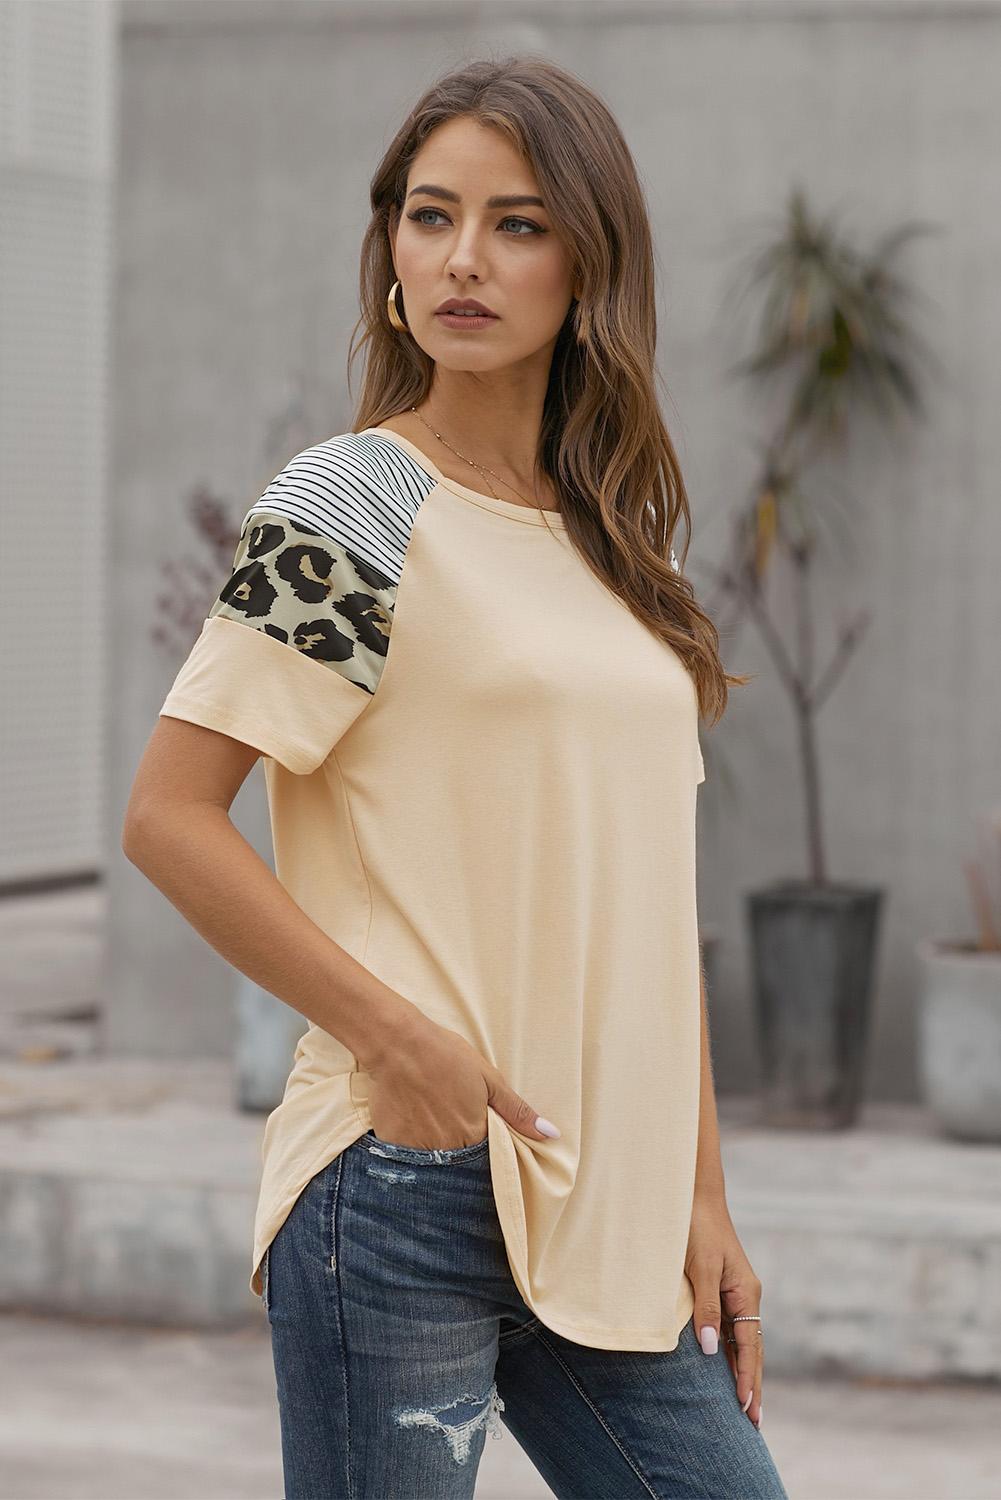 Khaki Striped Leopard Print Short Sleeve T-shirt For Women